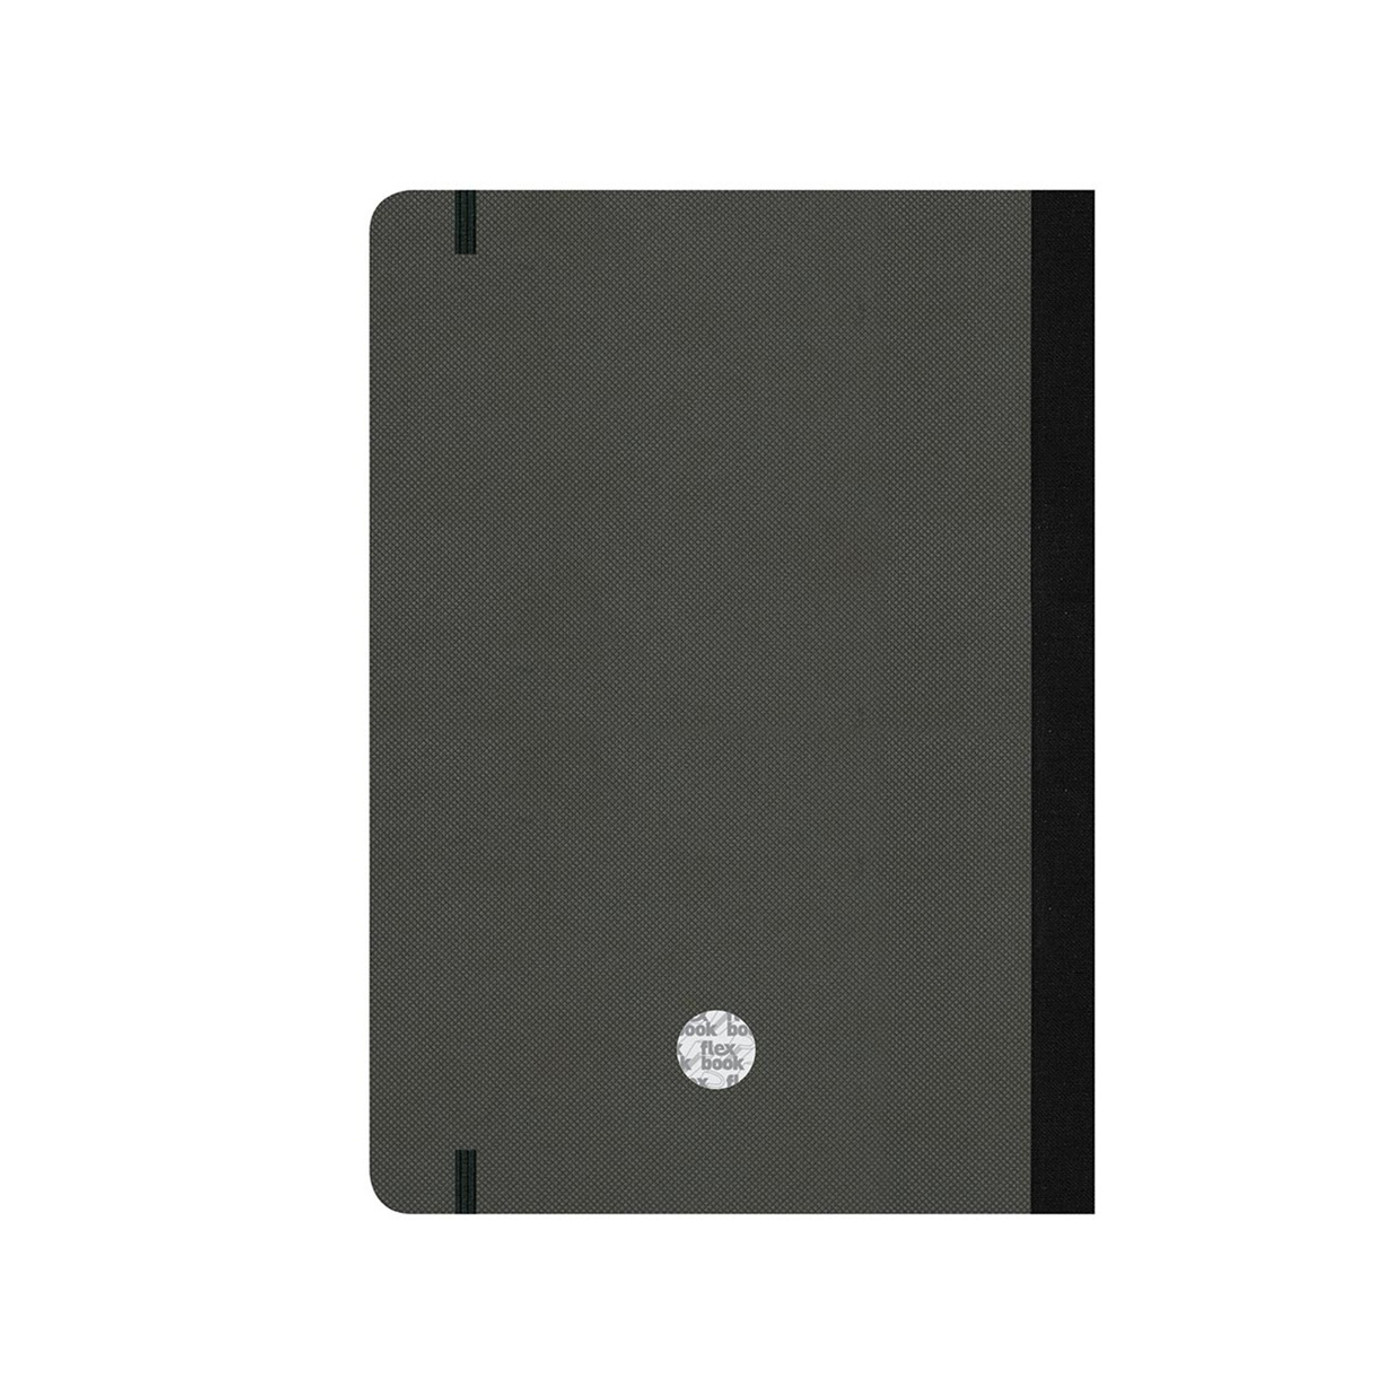 Flexbook - Adventure notebook - B5 - LINED